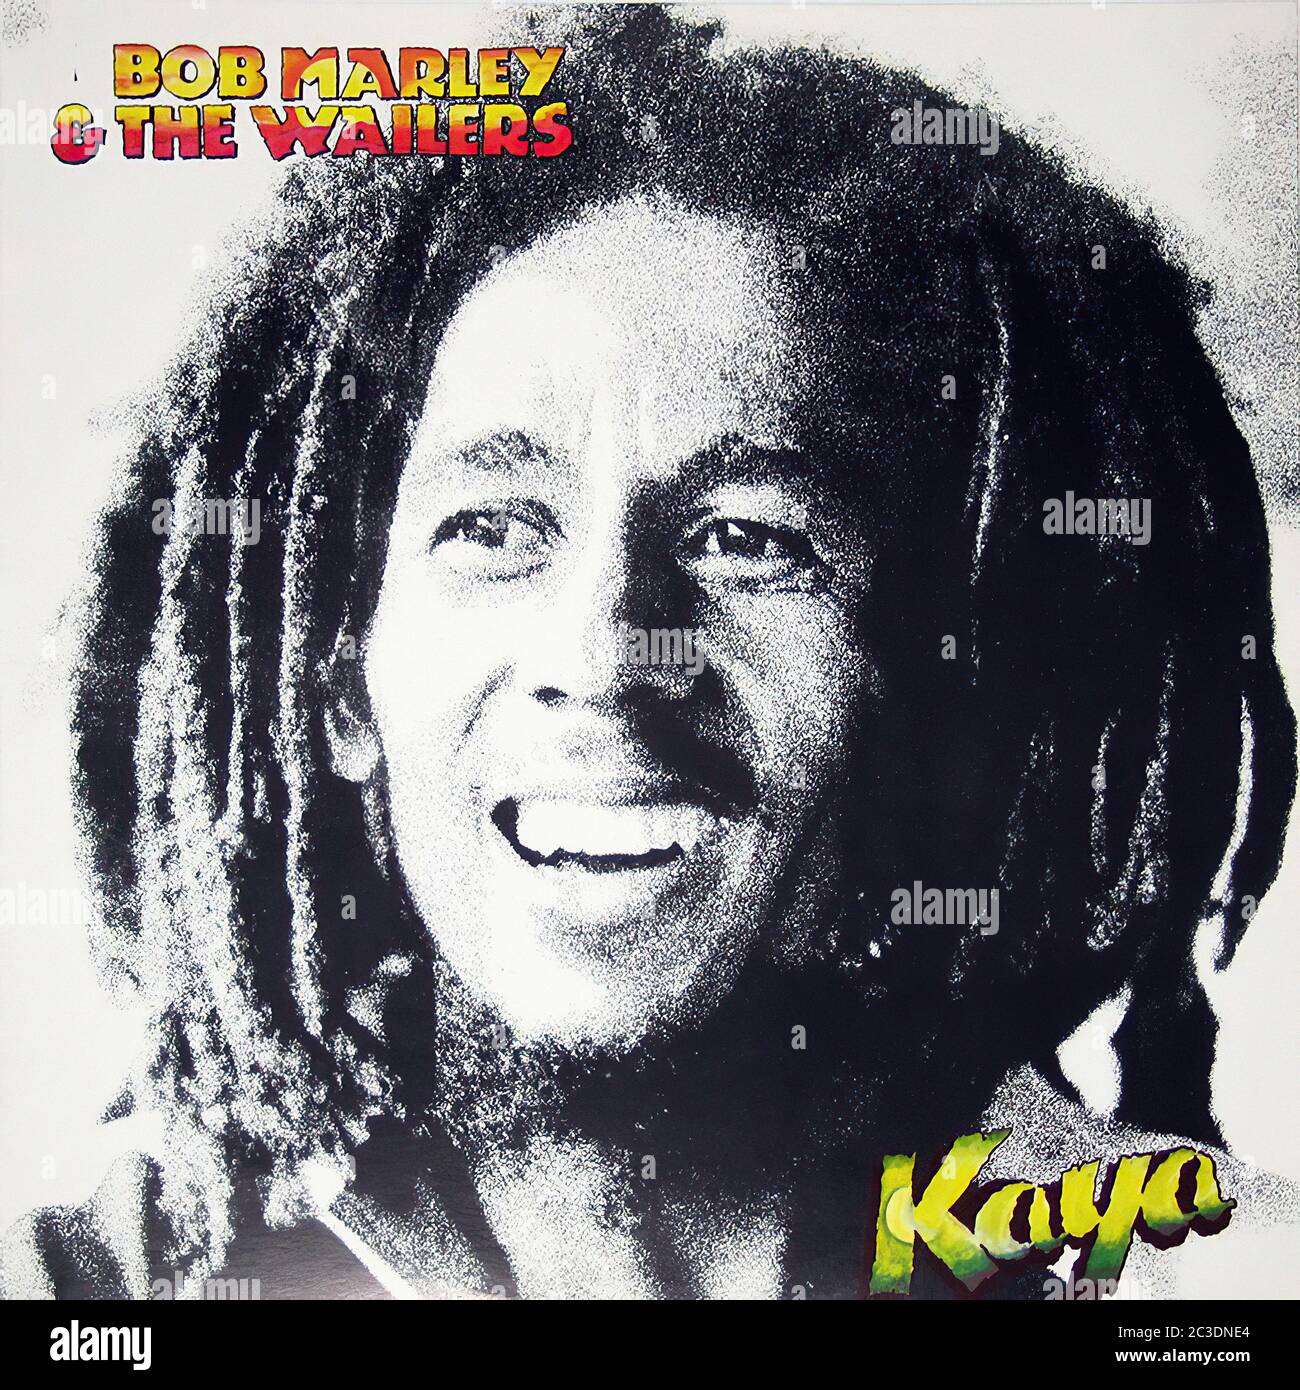 BOB MARLEY & THE WAILERS KAYA - Vintage 12'' vinyl LP Cover Stock Photo -  Alamy